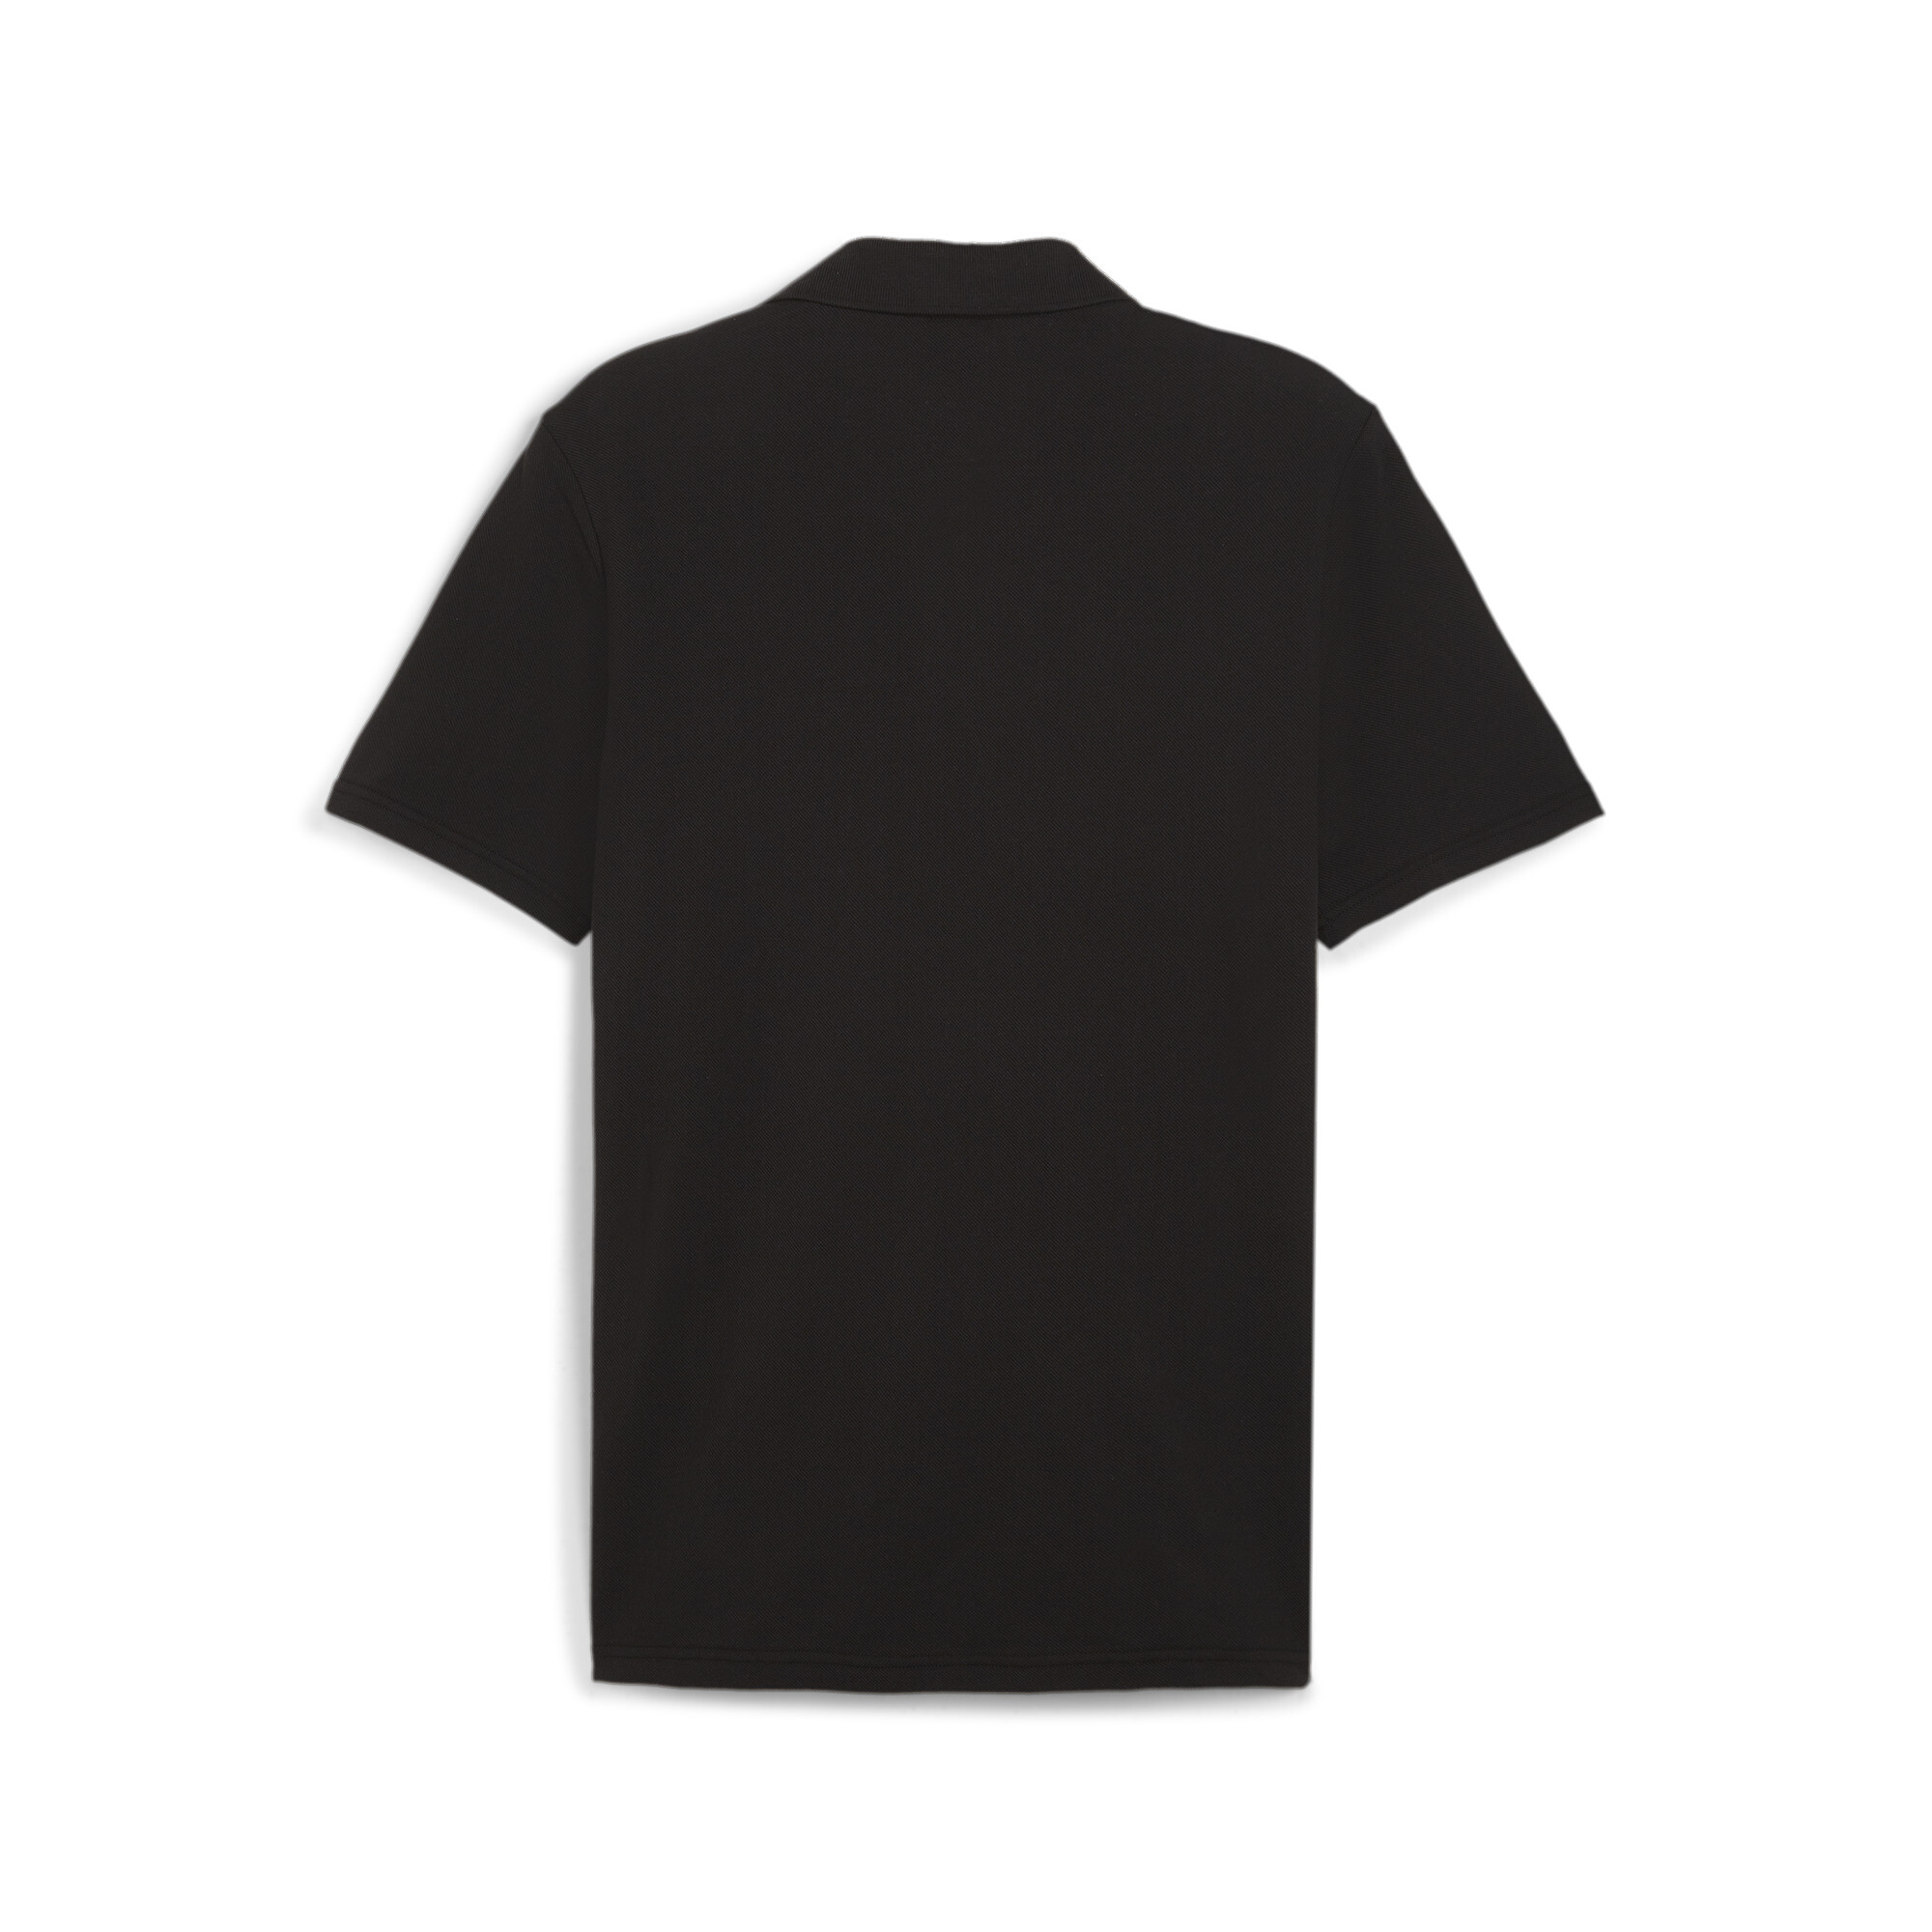 Men's Puma Scuderia Ferrari Style's Motorsport Polo T-Shirt, Black T-Shirt, Size XL T-Shirt, Clothing